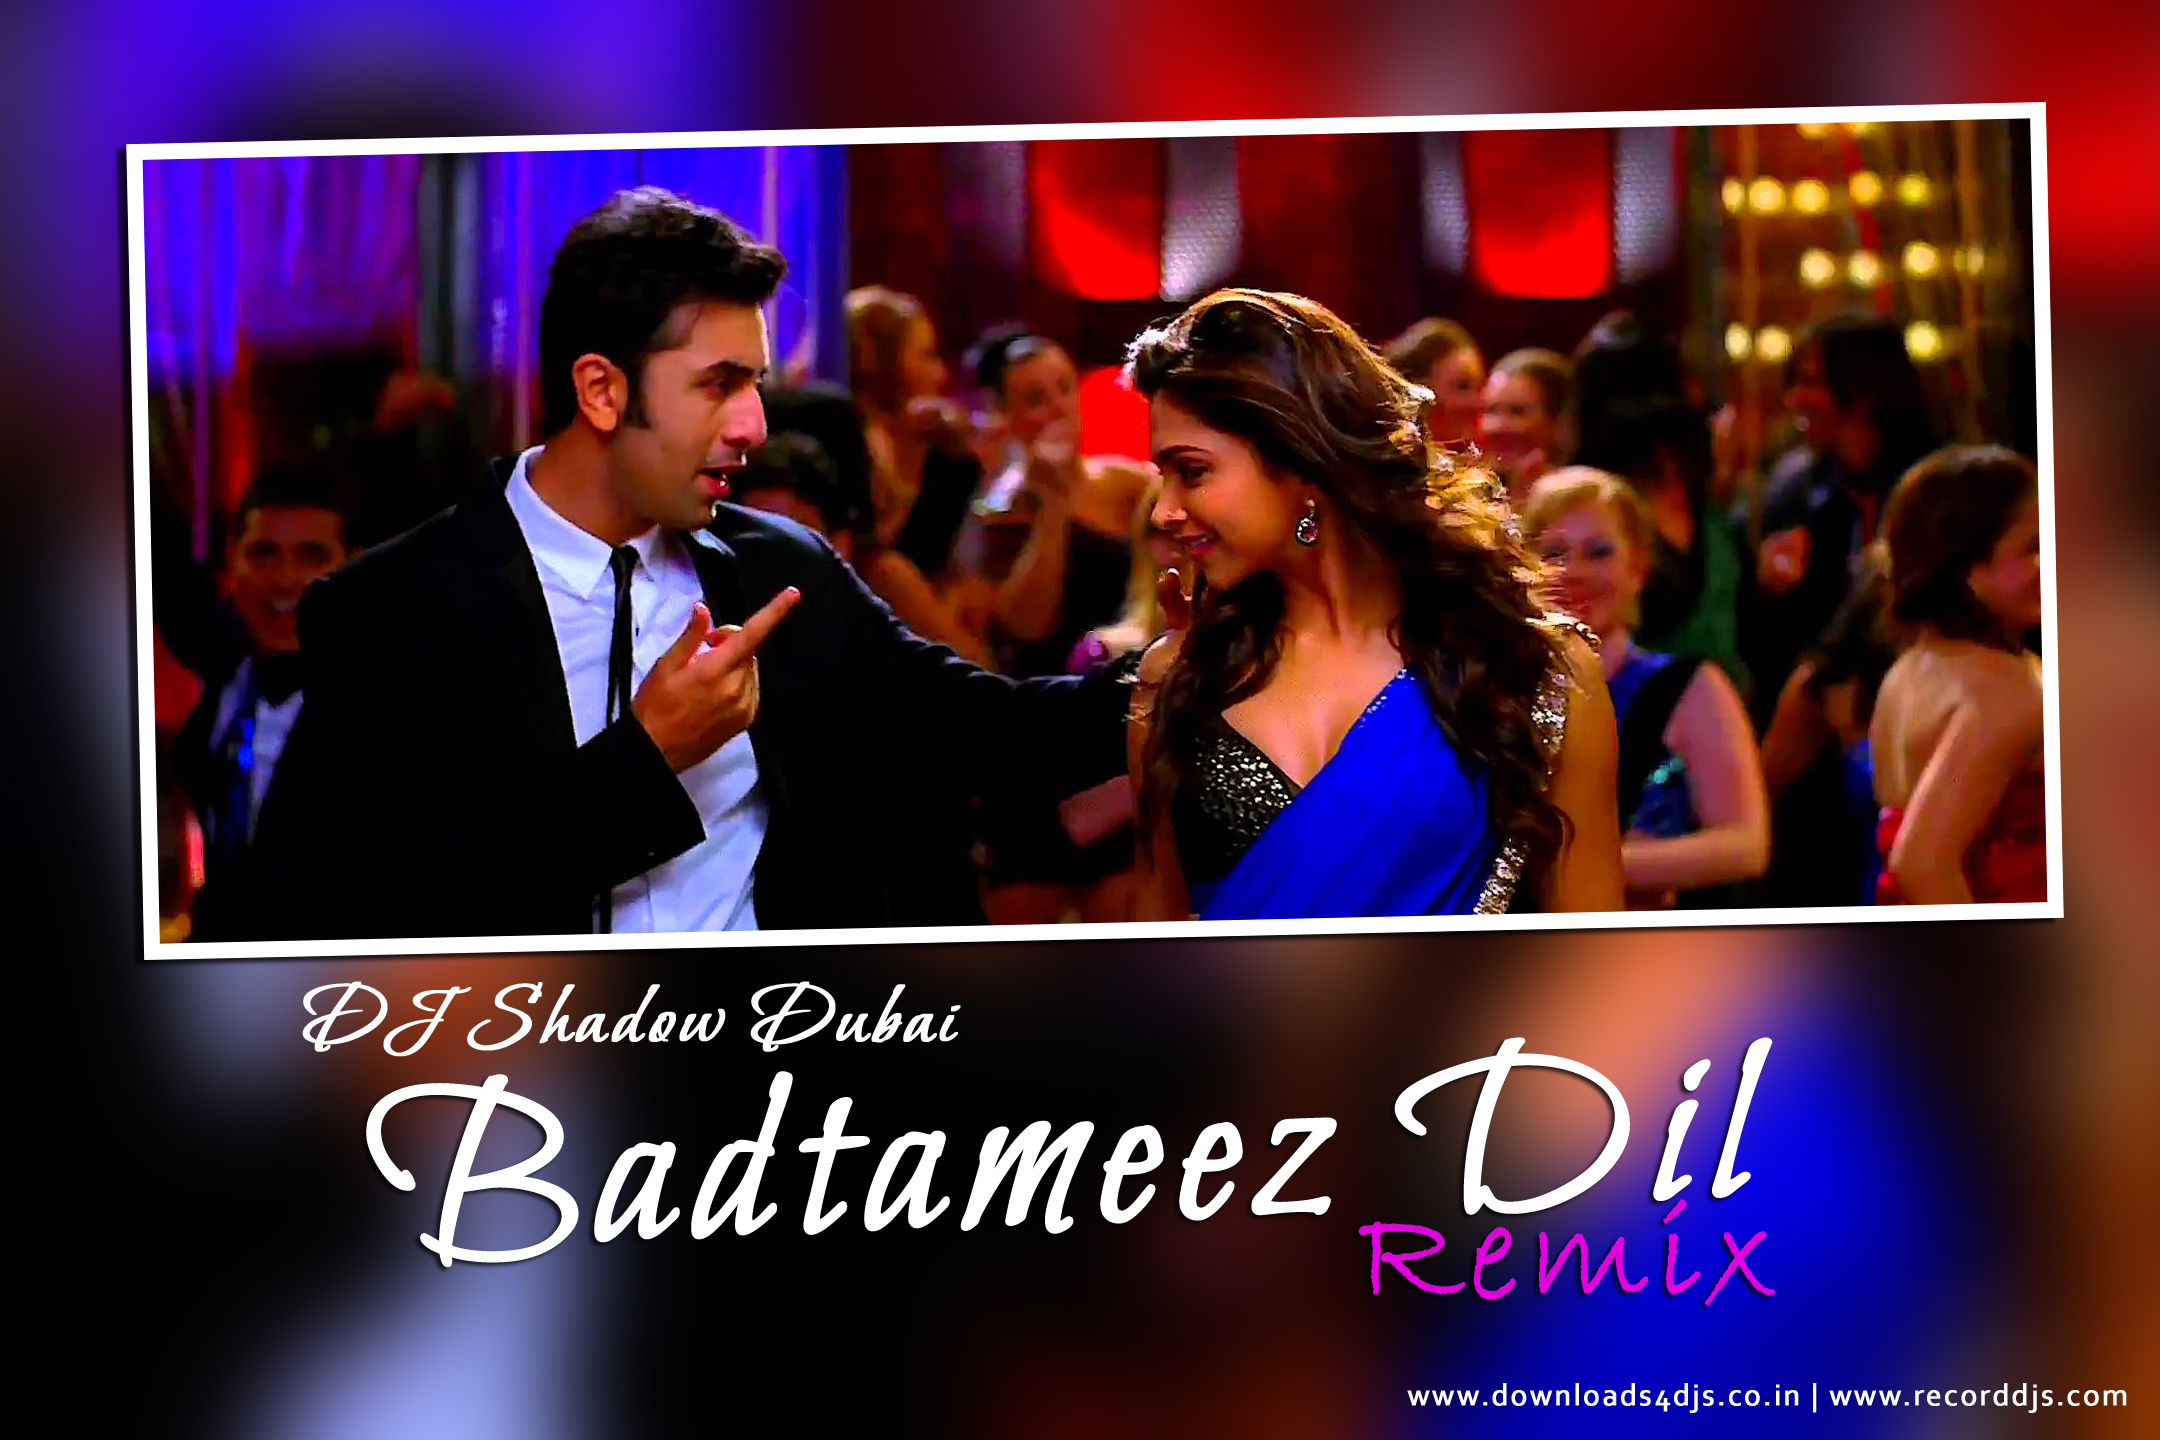 Yeh Jawani Hai Deewani - Badtameez Dil (DJ Shadow Dubai Remix) Downloads4Dj...